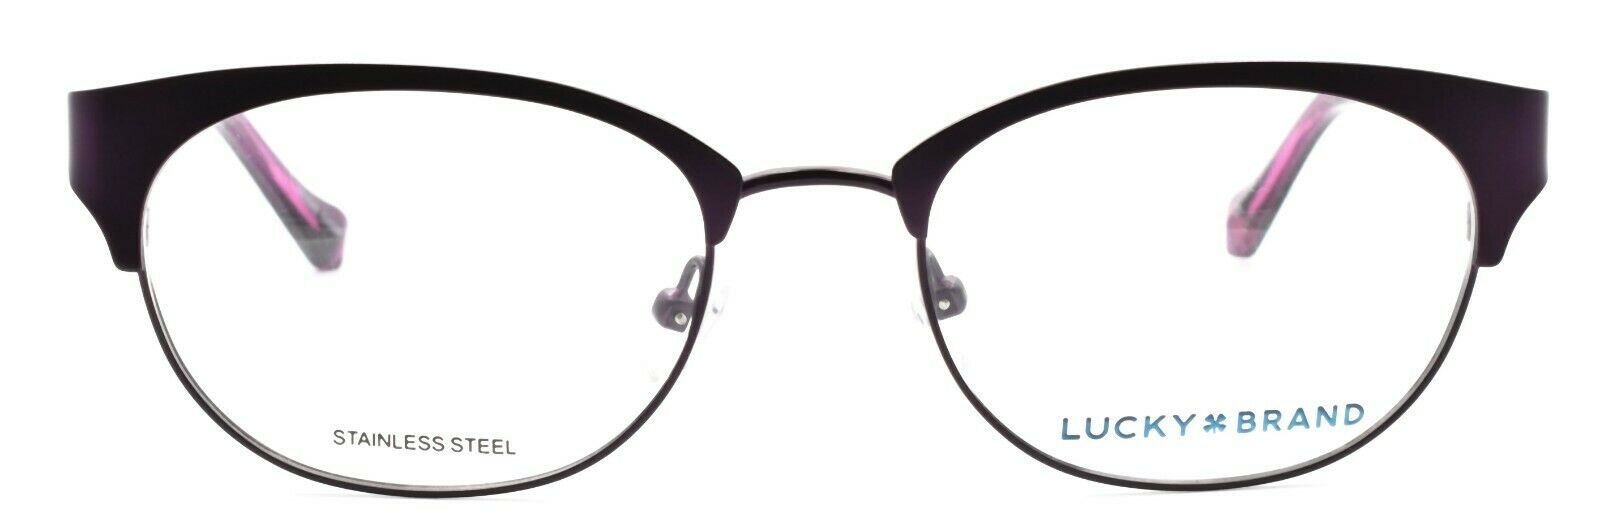 2-LUCKY BRAND D103 Women's Eyeglasses Frames 50-18-135 Purple + CASE-751286281729-IKSpecs